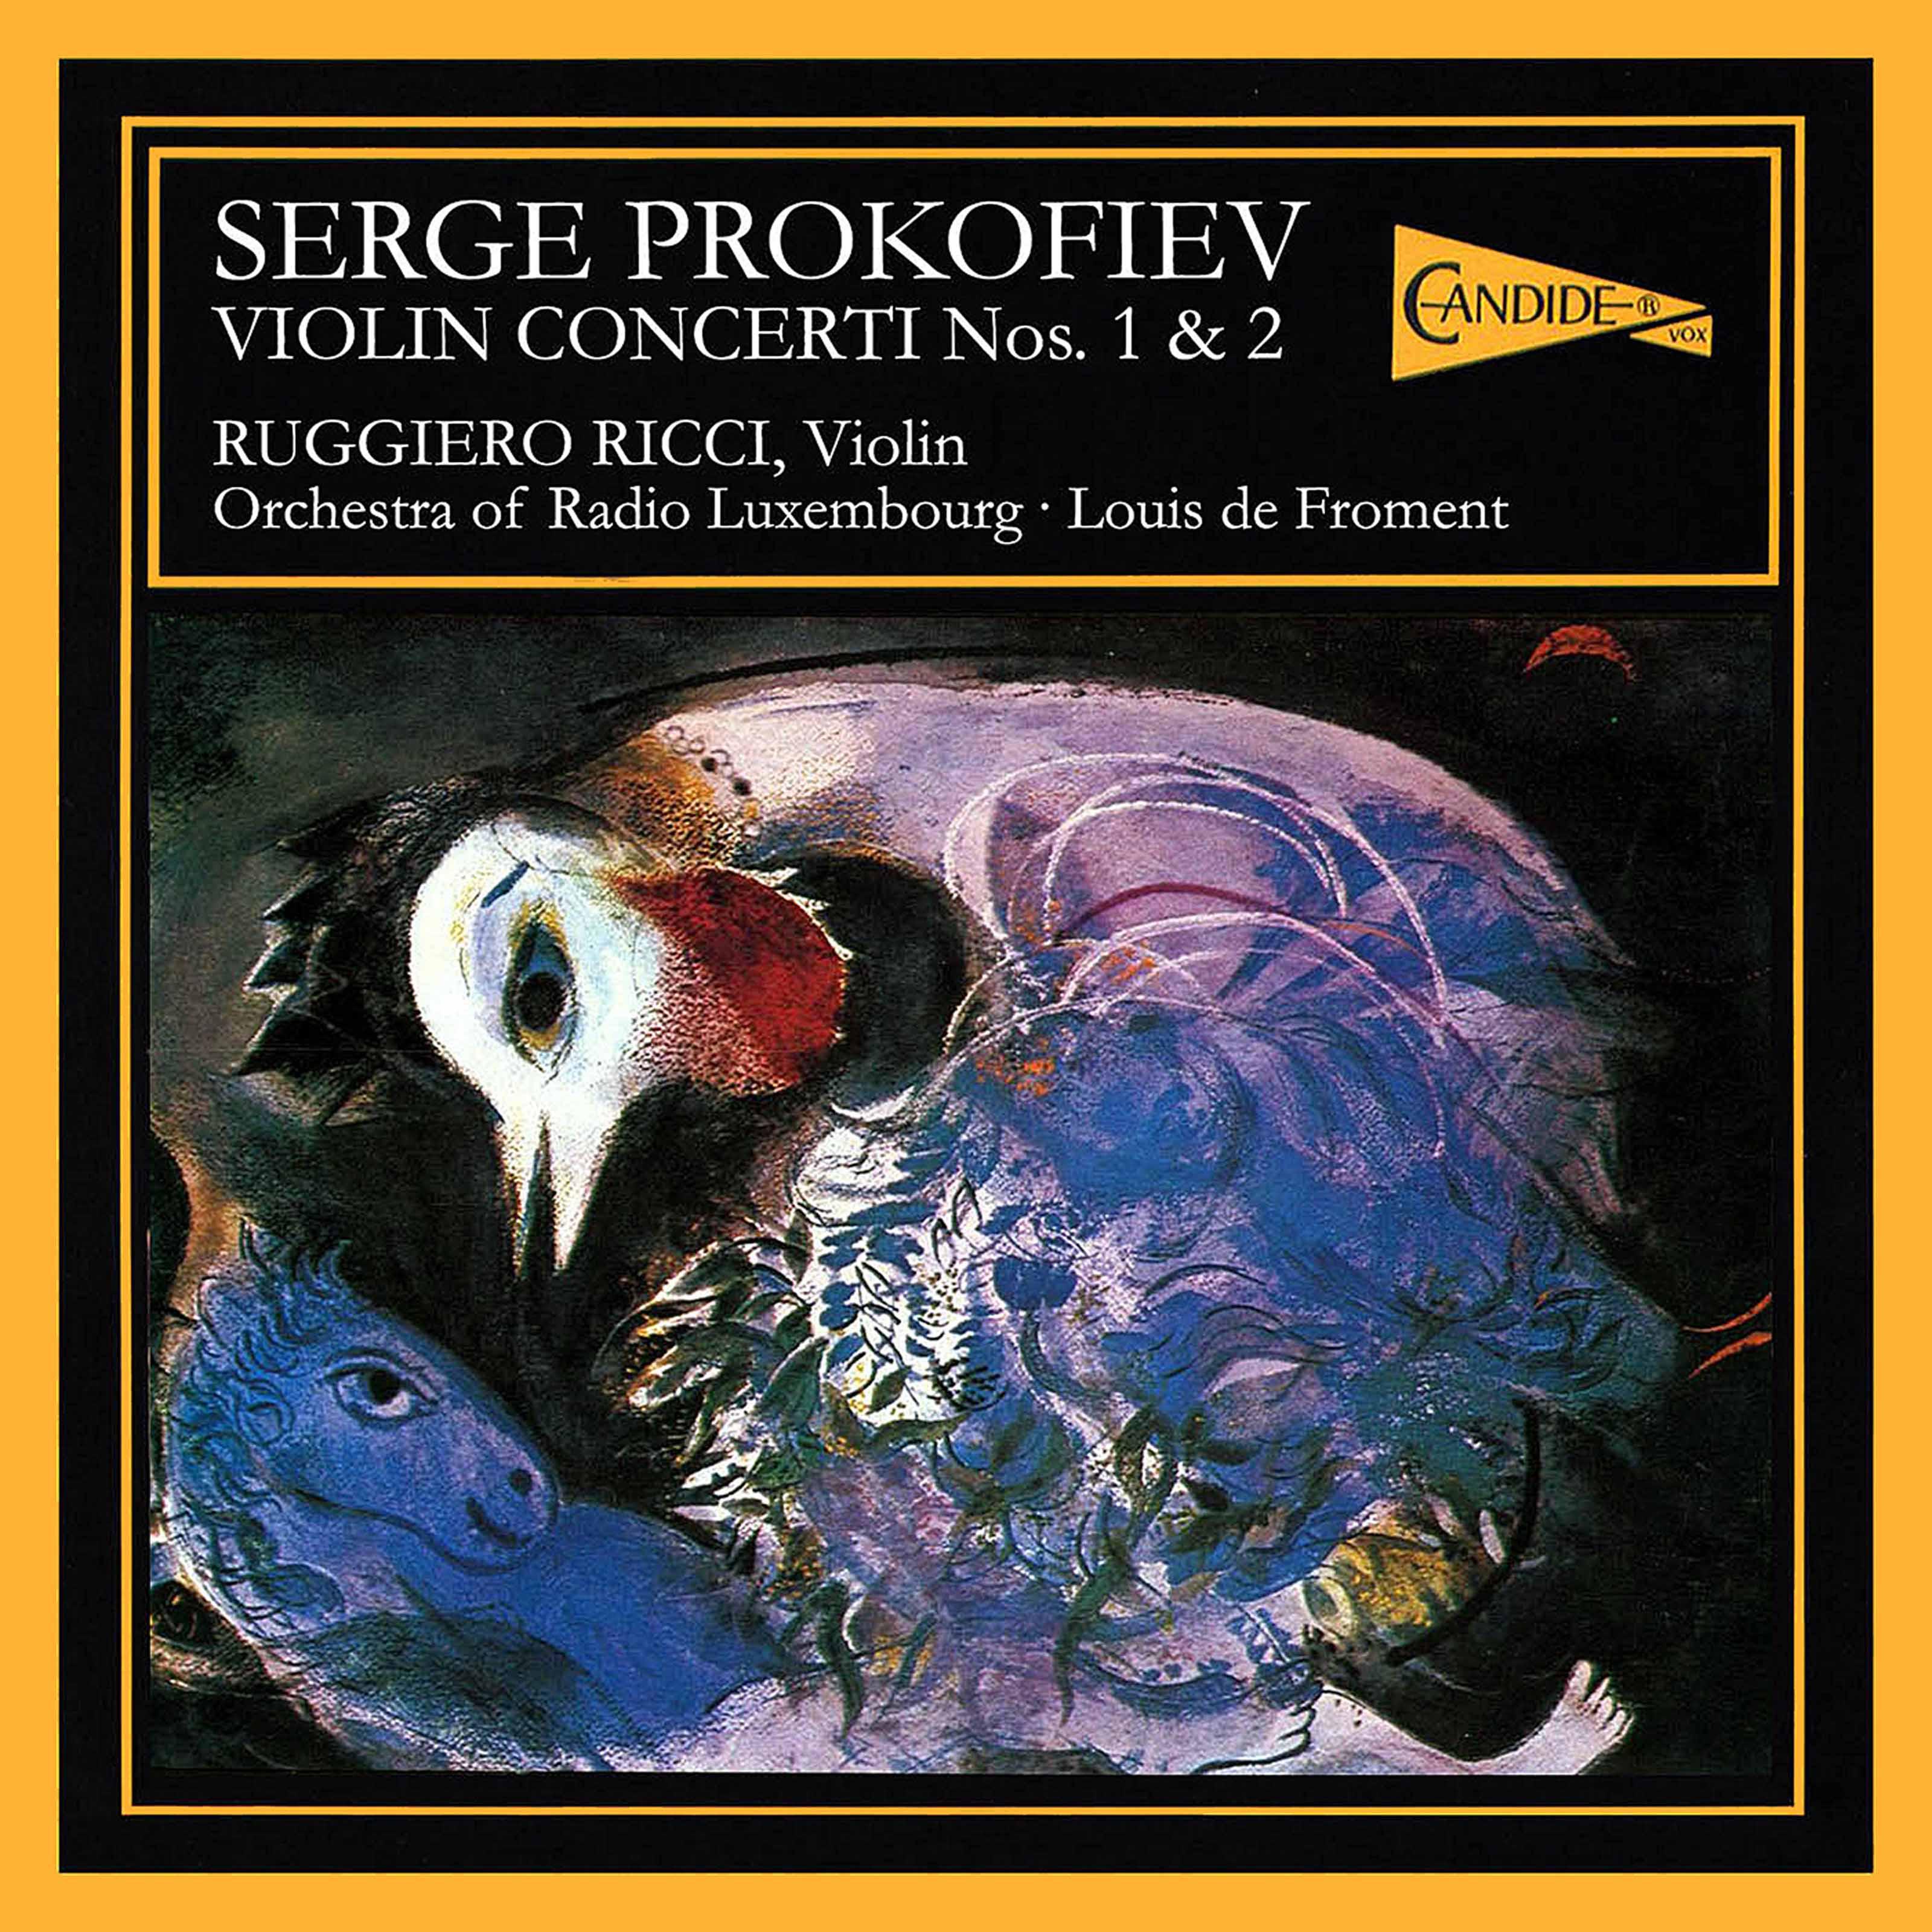 Violin Concerto No. 2 in G Minor, Op. 63: III. Allegro, ben marcato